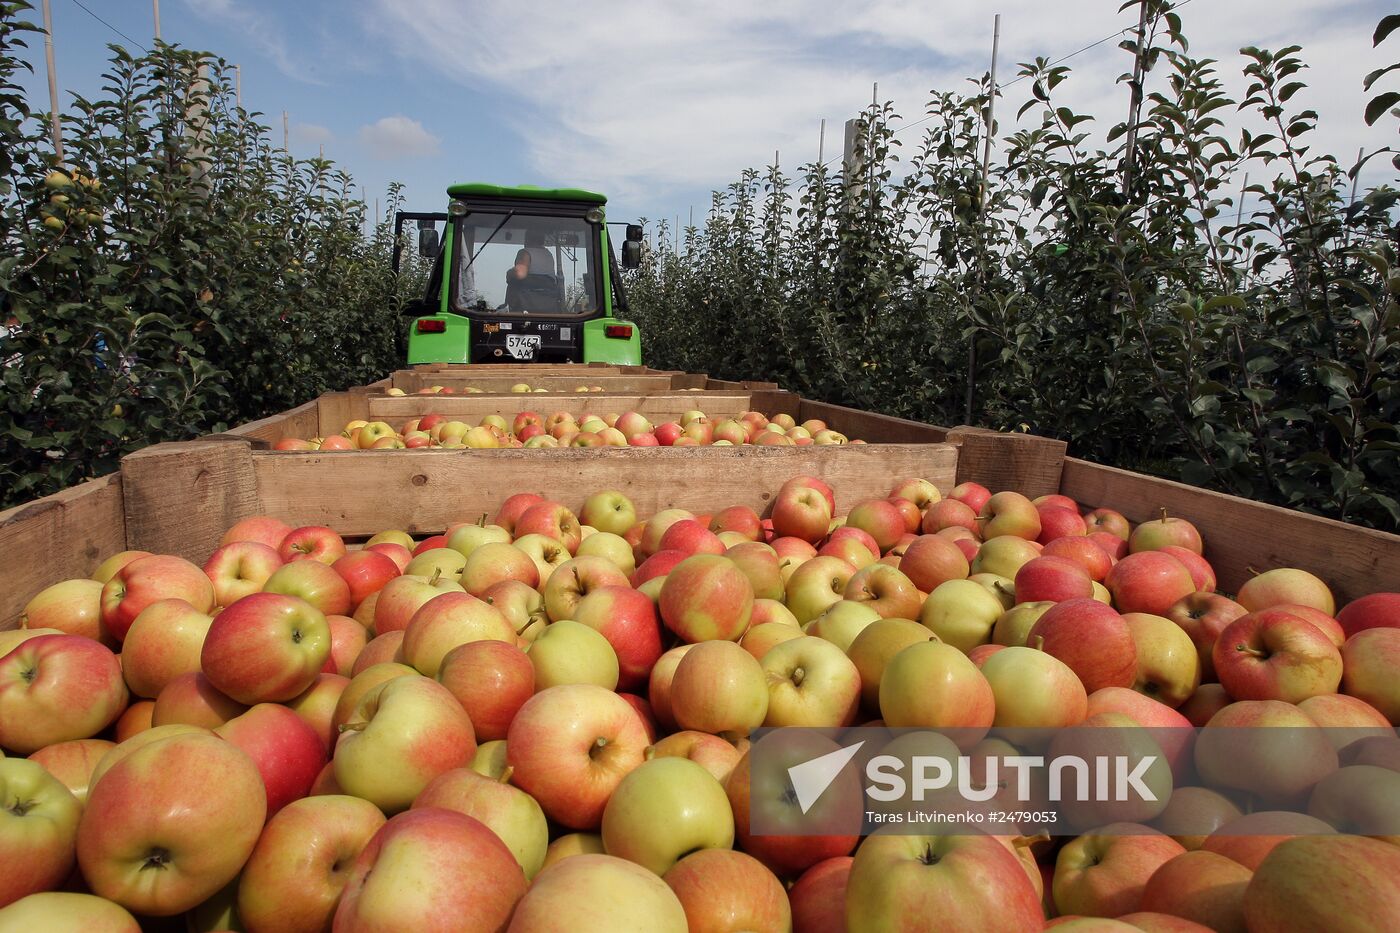 Picking apples in Simferopol